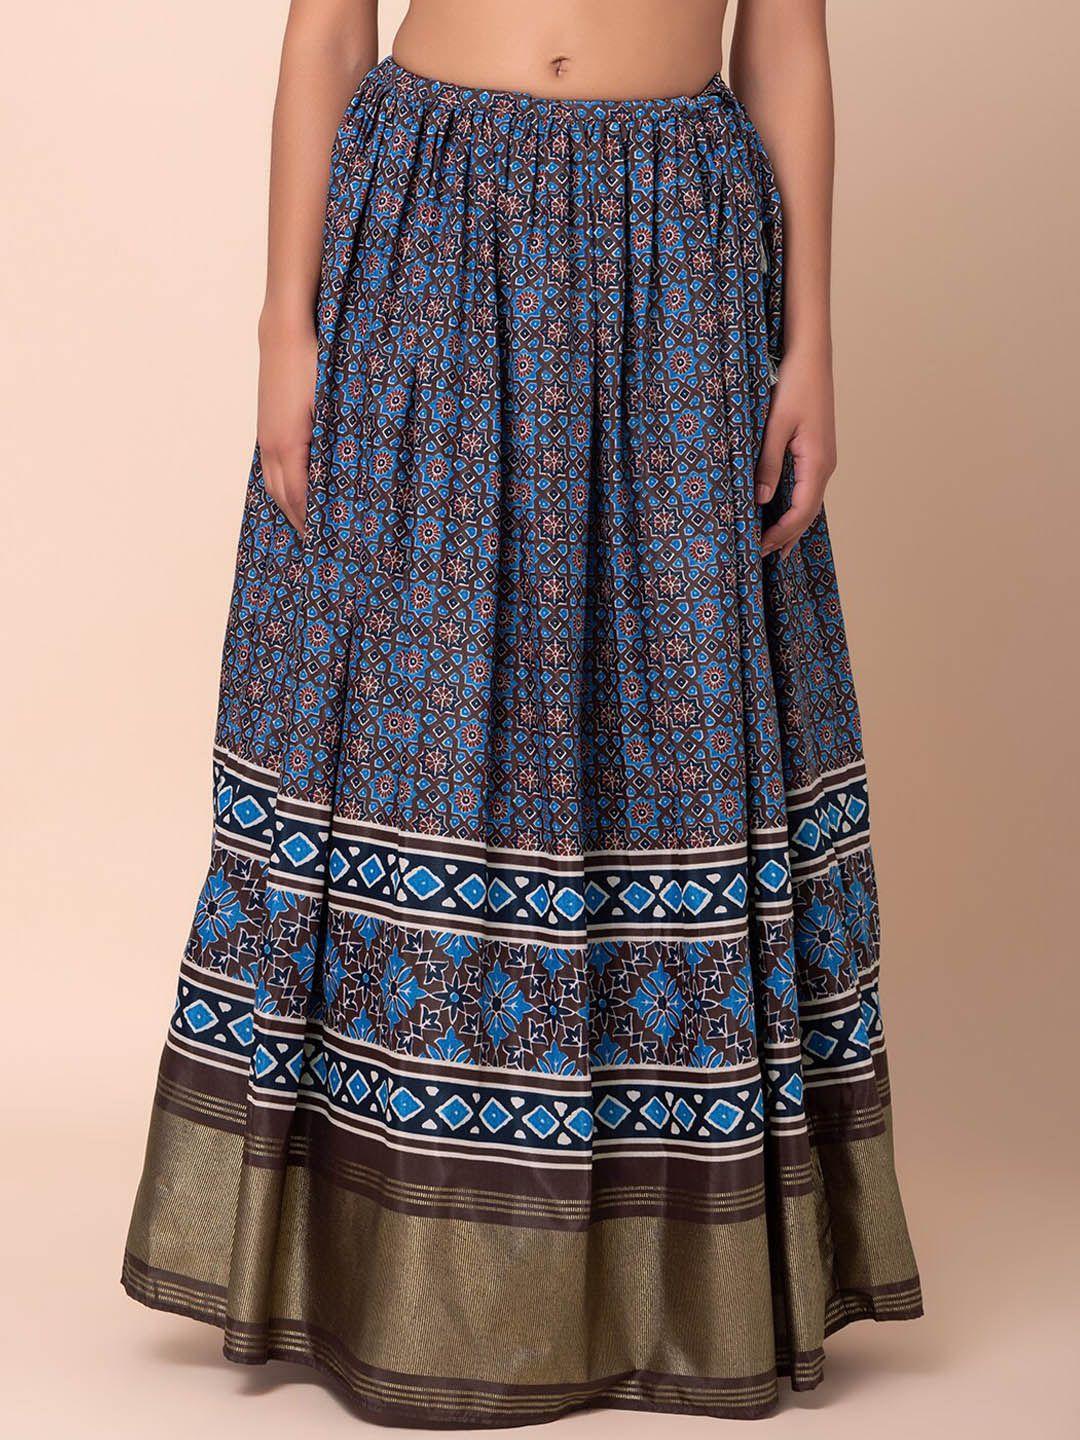 INDYA Ethnic Motif Printed Gathered Flared Skirt